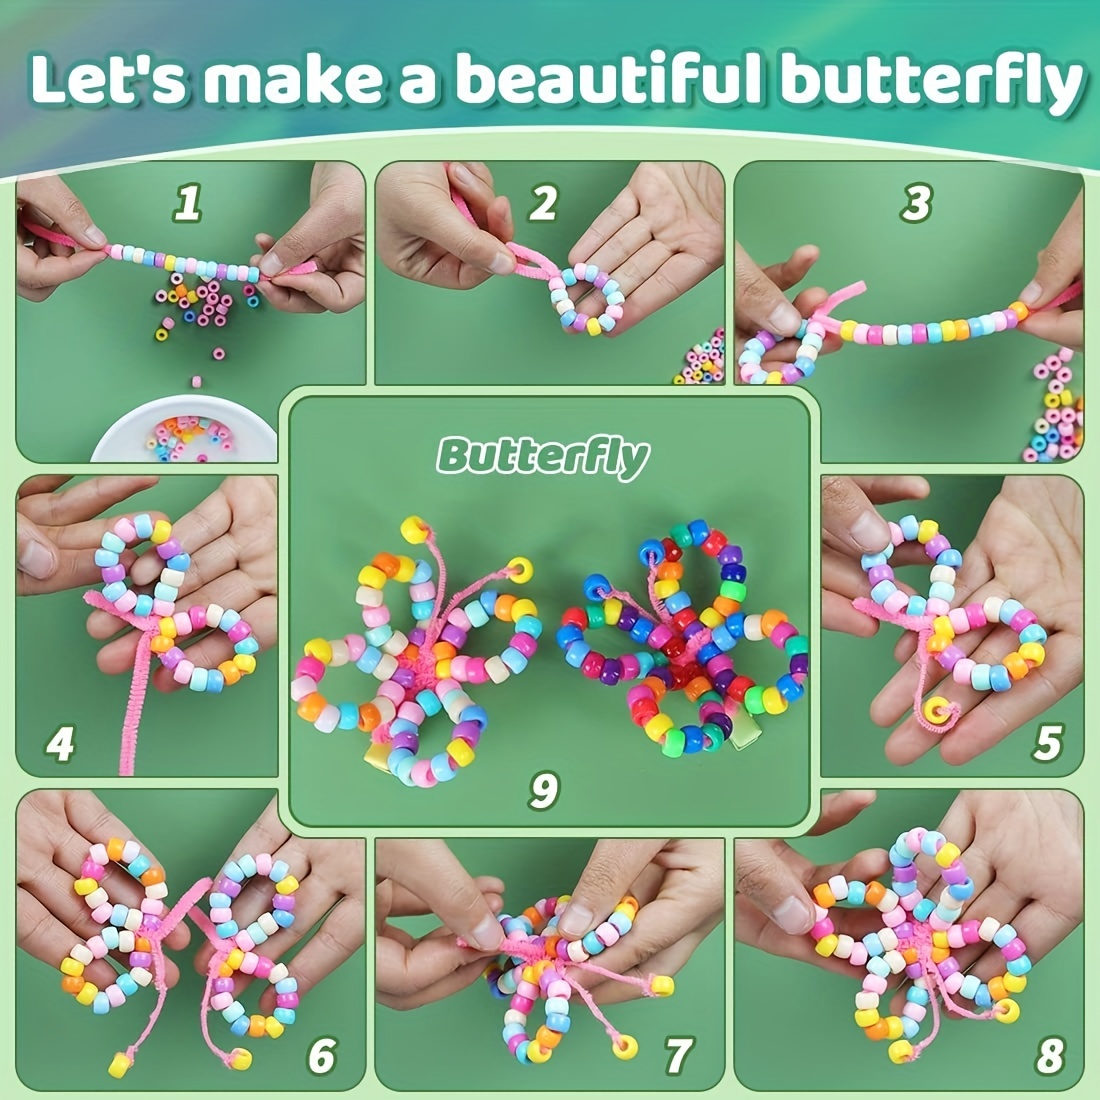 Mandala Crafts Plastic Big Pony Beads Bulk Kit with Organizer Box for Kid  Crafts, Bracelet Jewelry Making, Hair Braiding, Dream Catchers, 1200 CT 9mm  Opaque Rainbow 